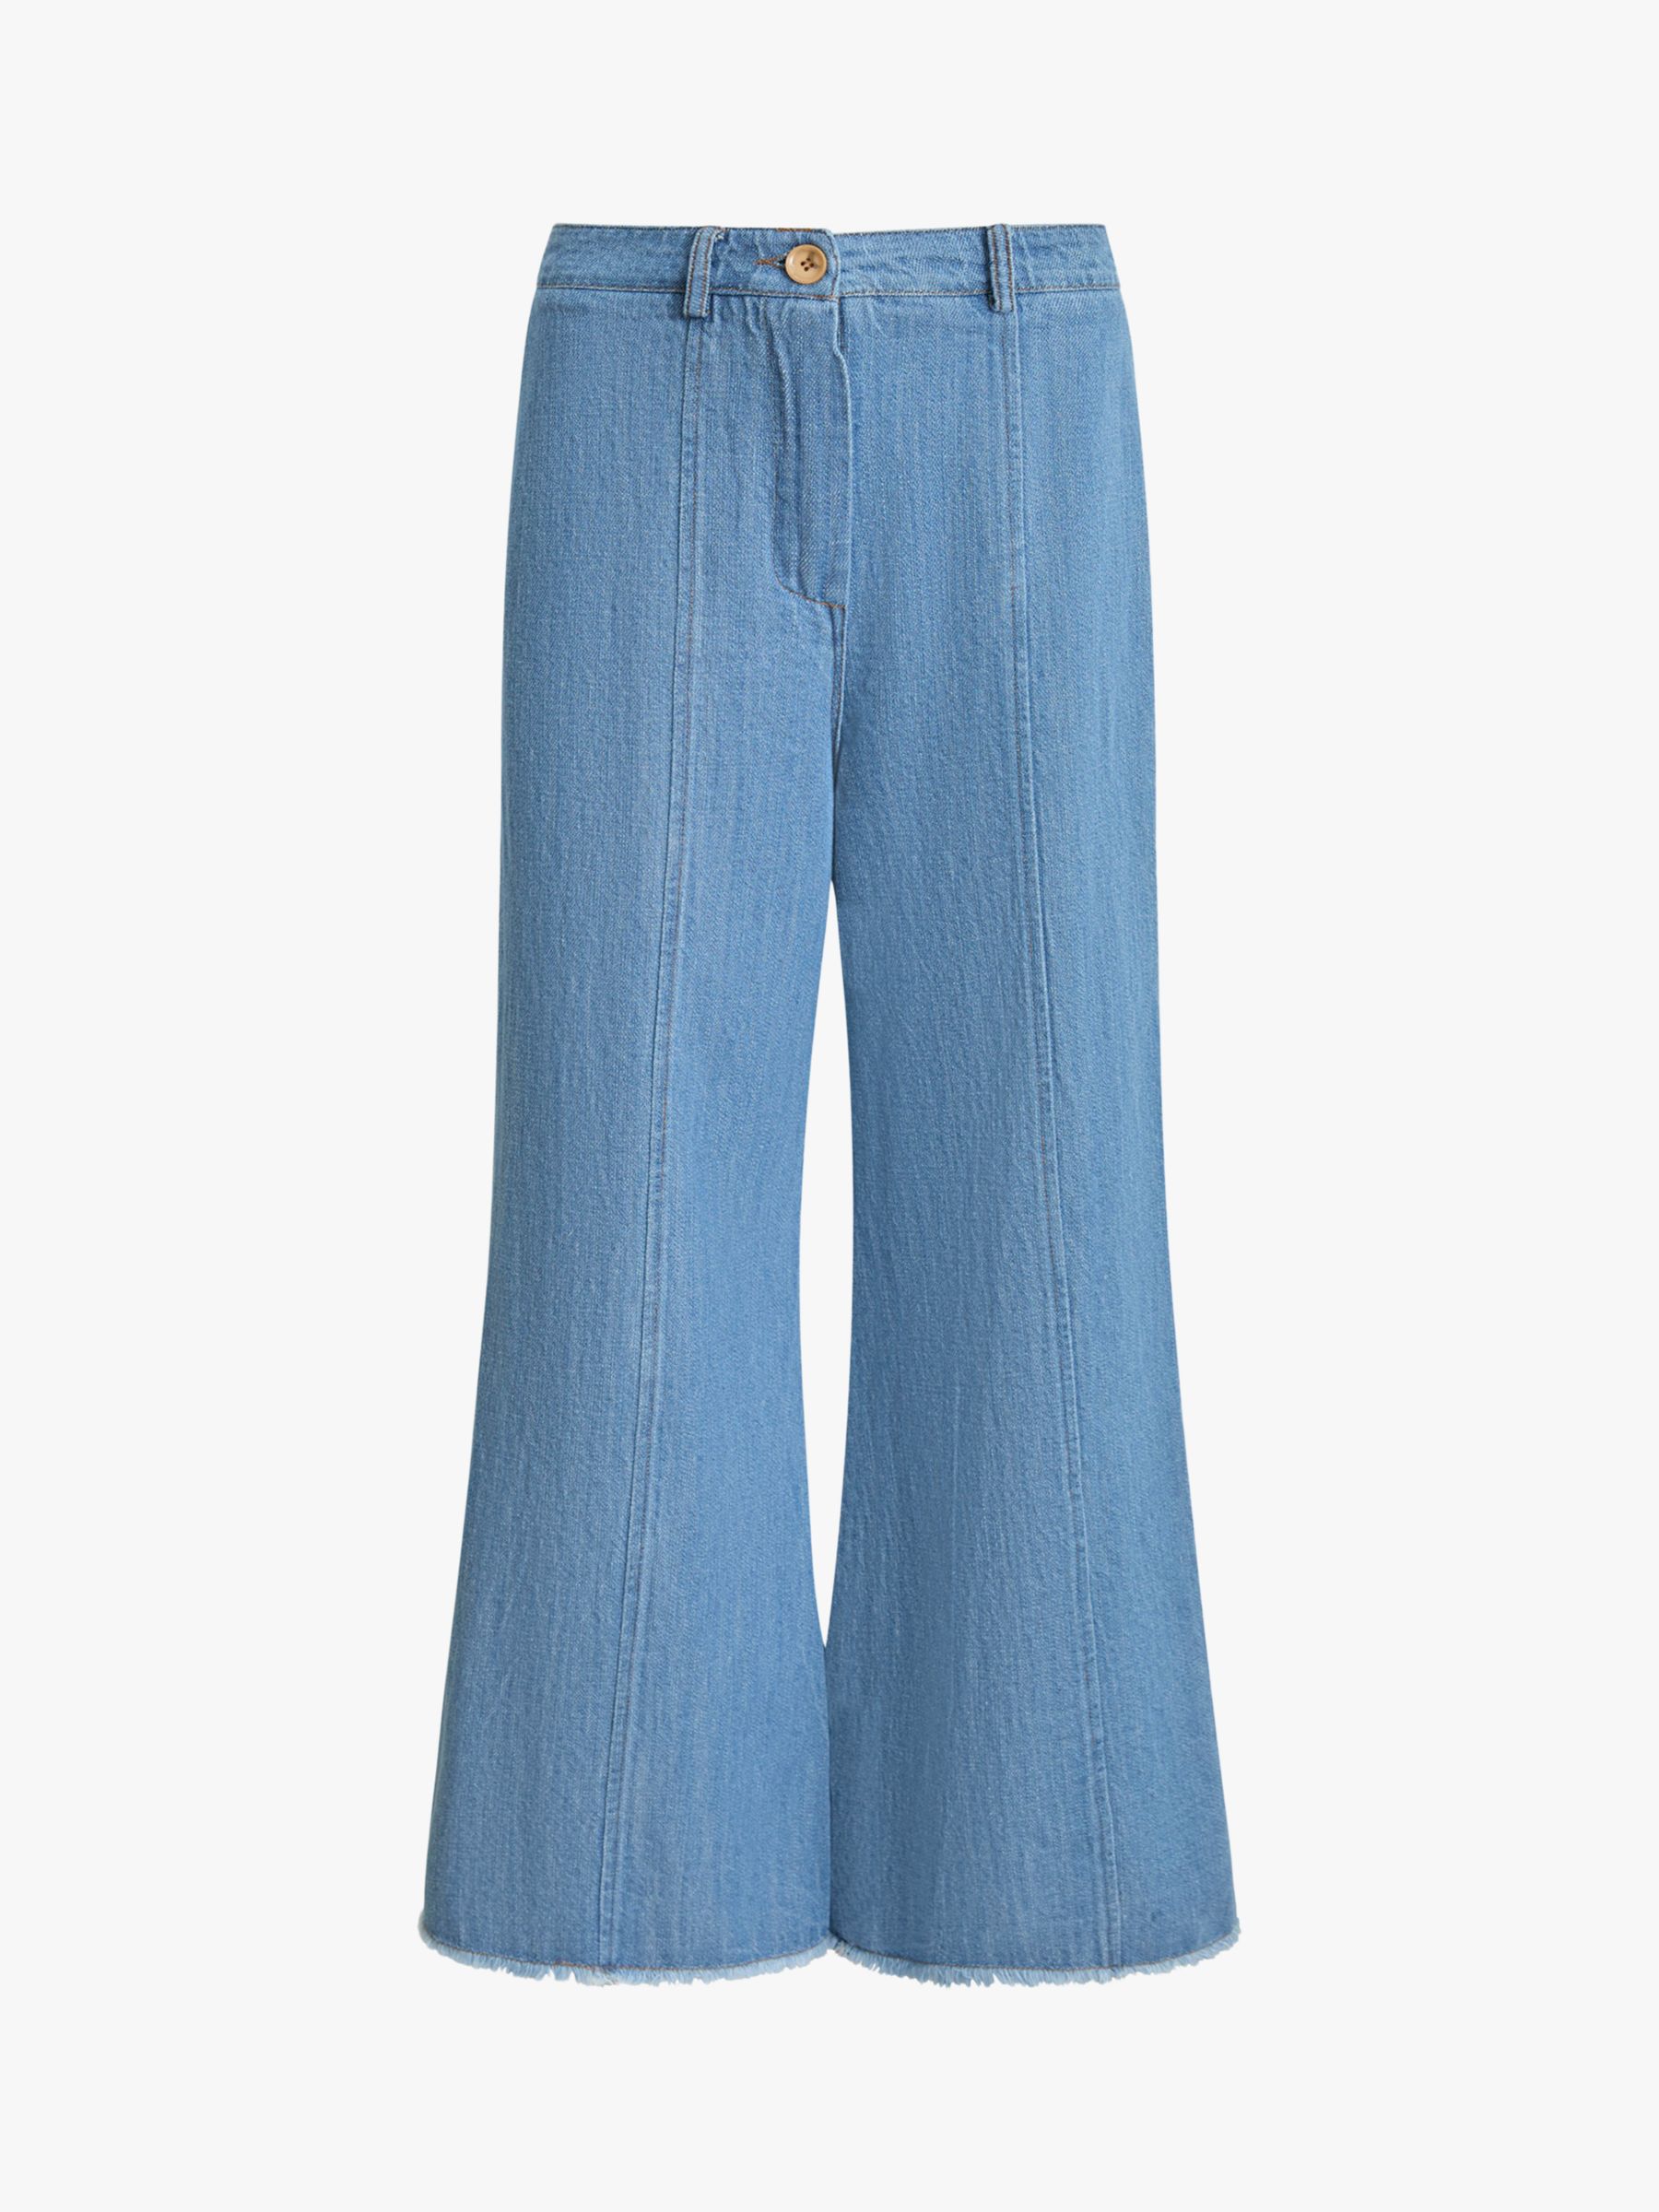 James Lakeland Cotton Flared Jeans, Denim, 8